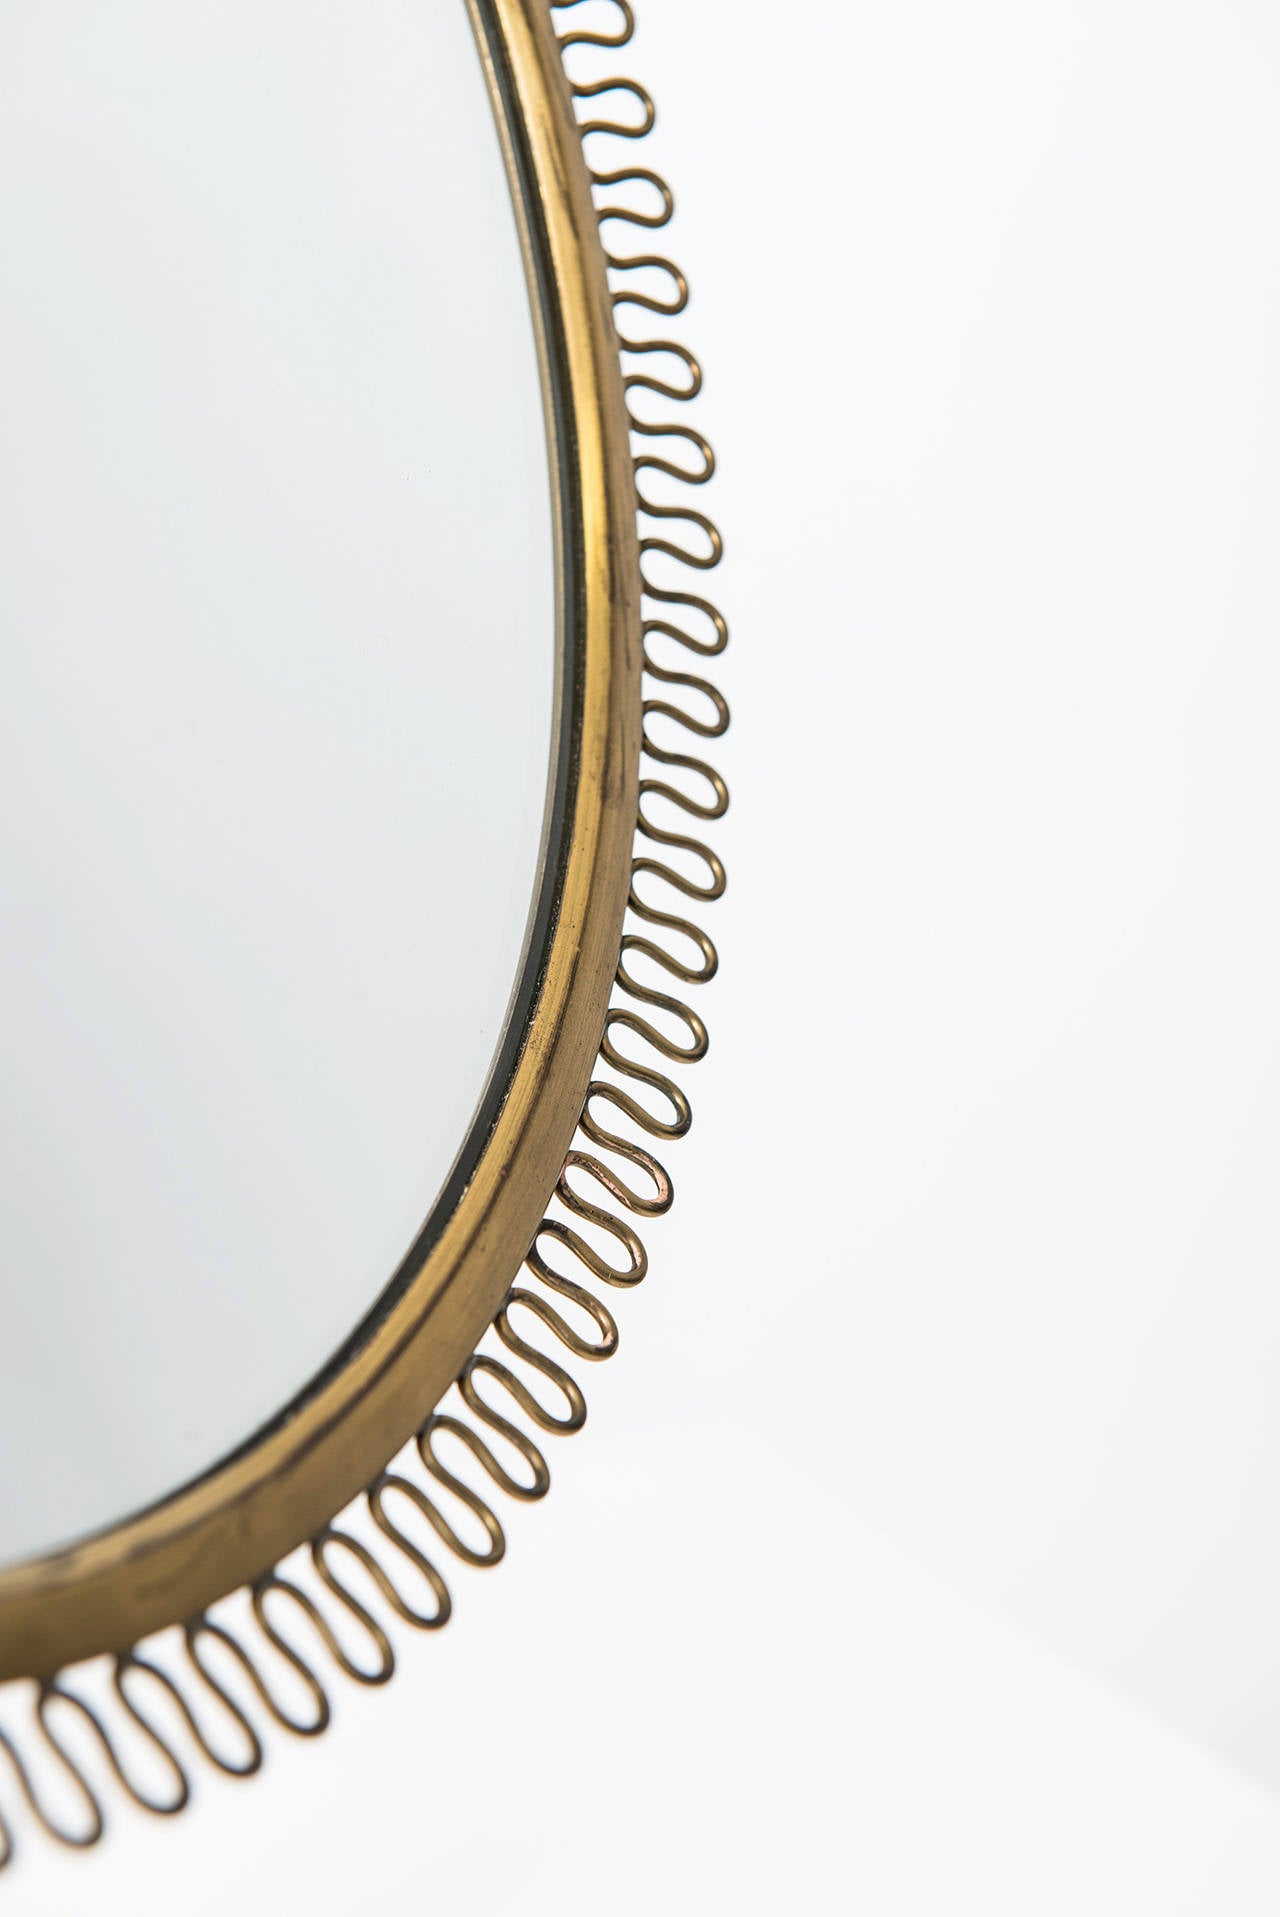 Swedish Josef Frank Table Mirror Produced by Svenskt Tenn in Sweden